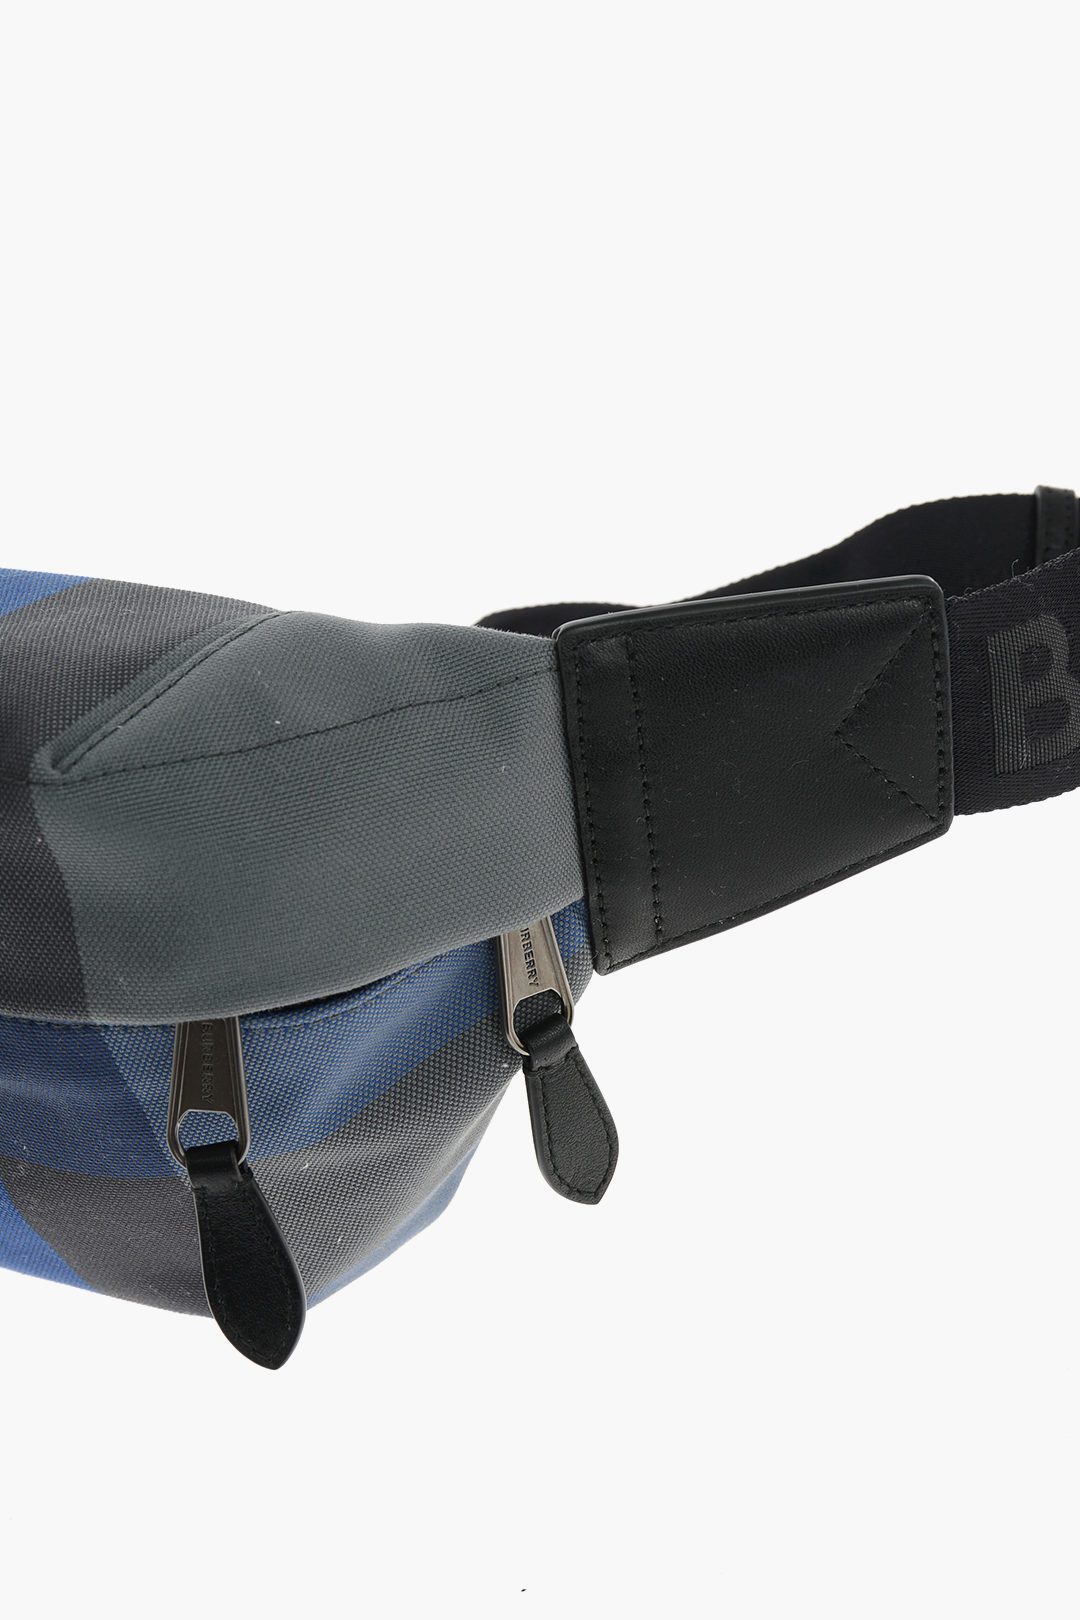 Burberry 'Sonny' belt bag, Men's Bags